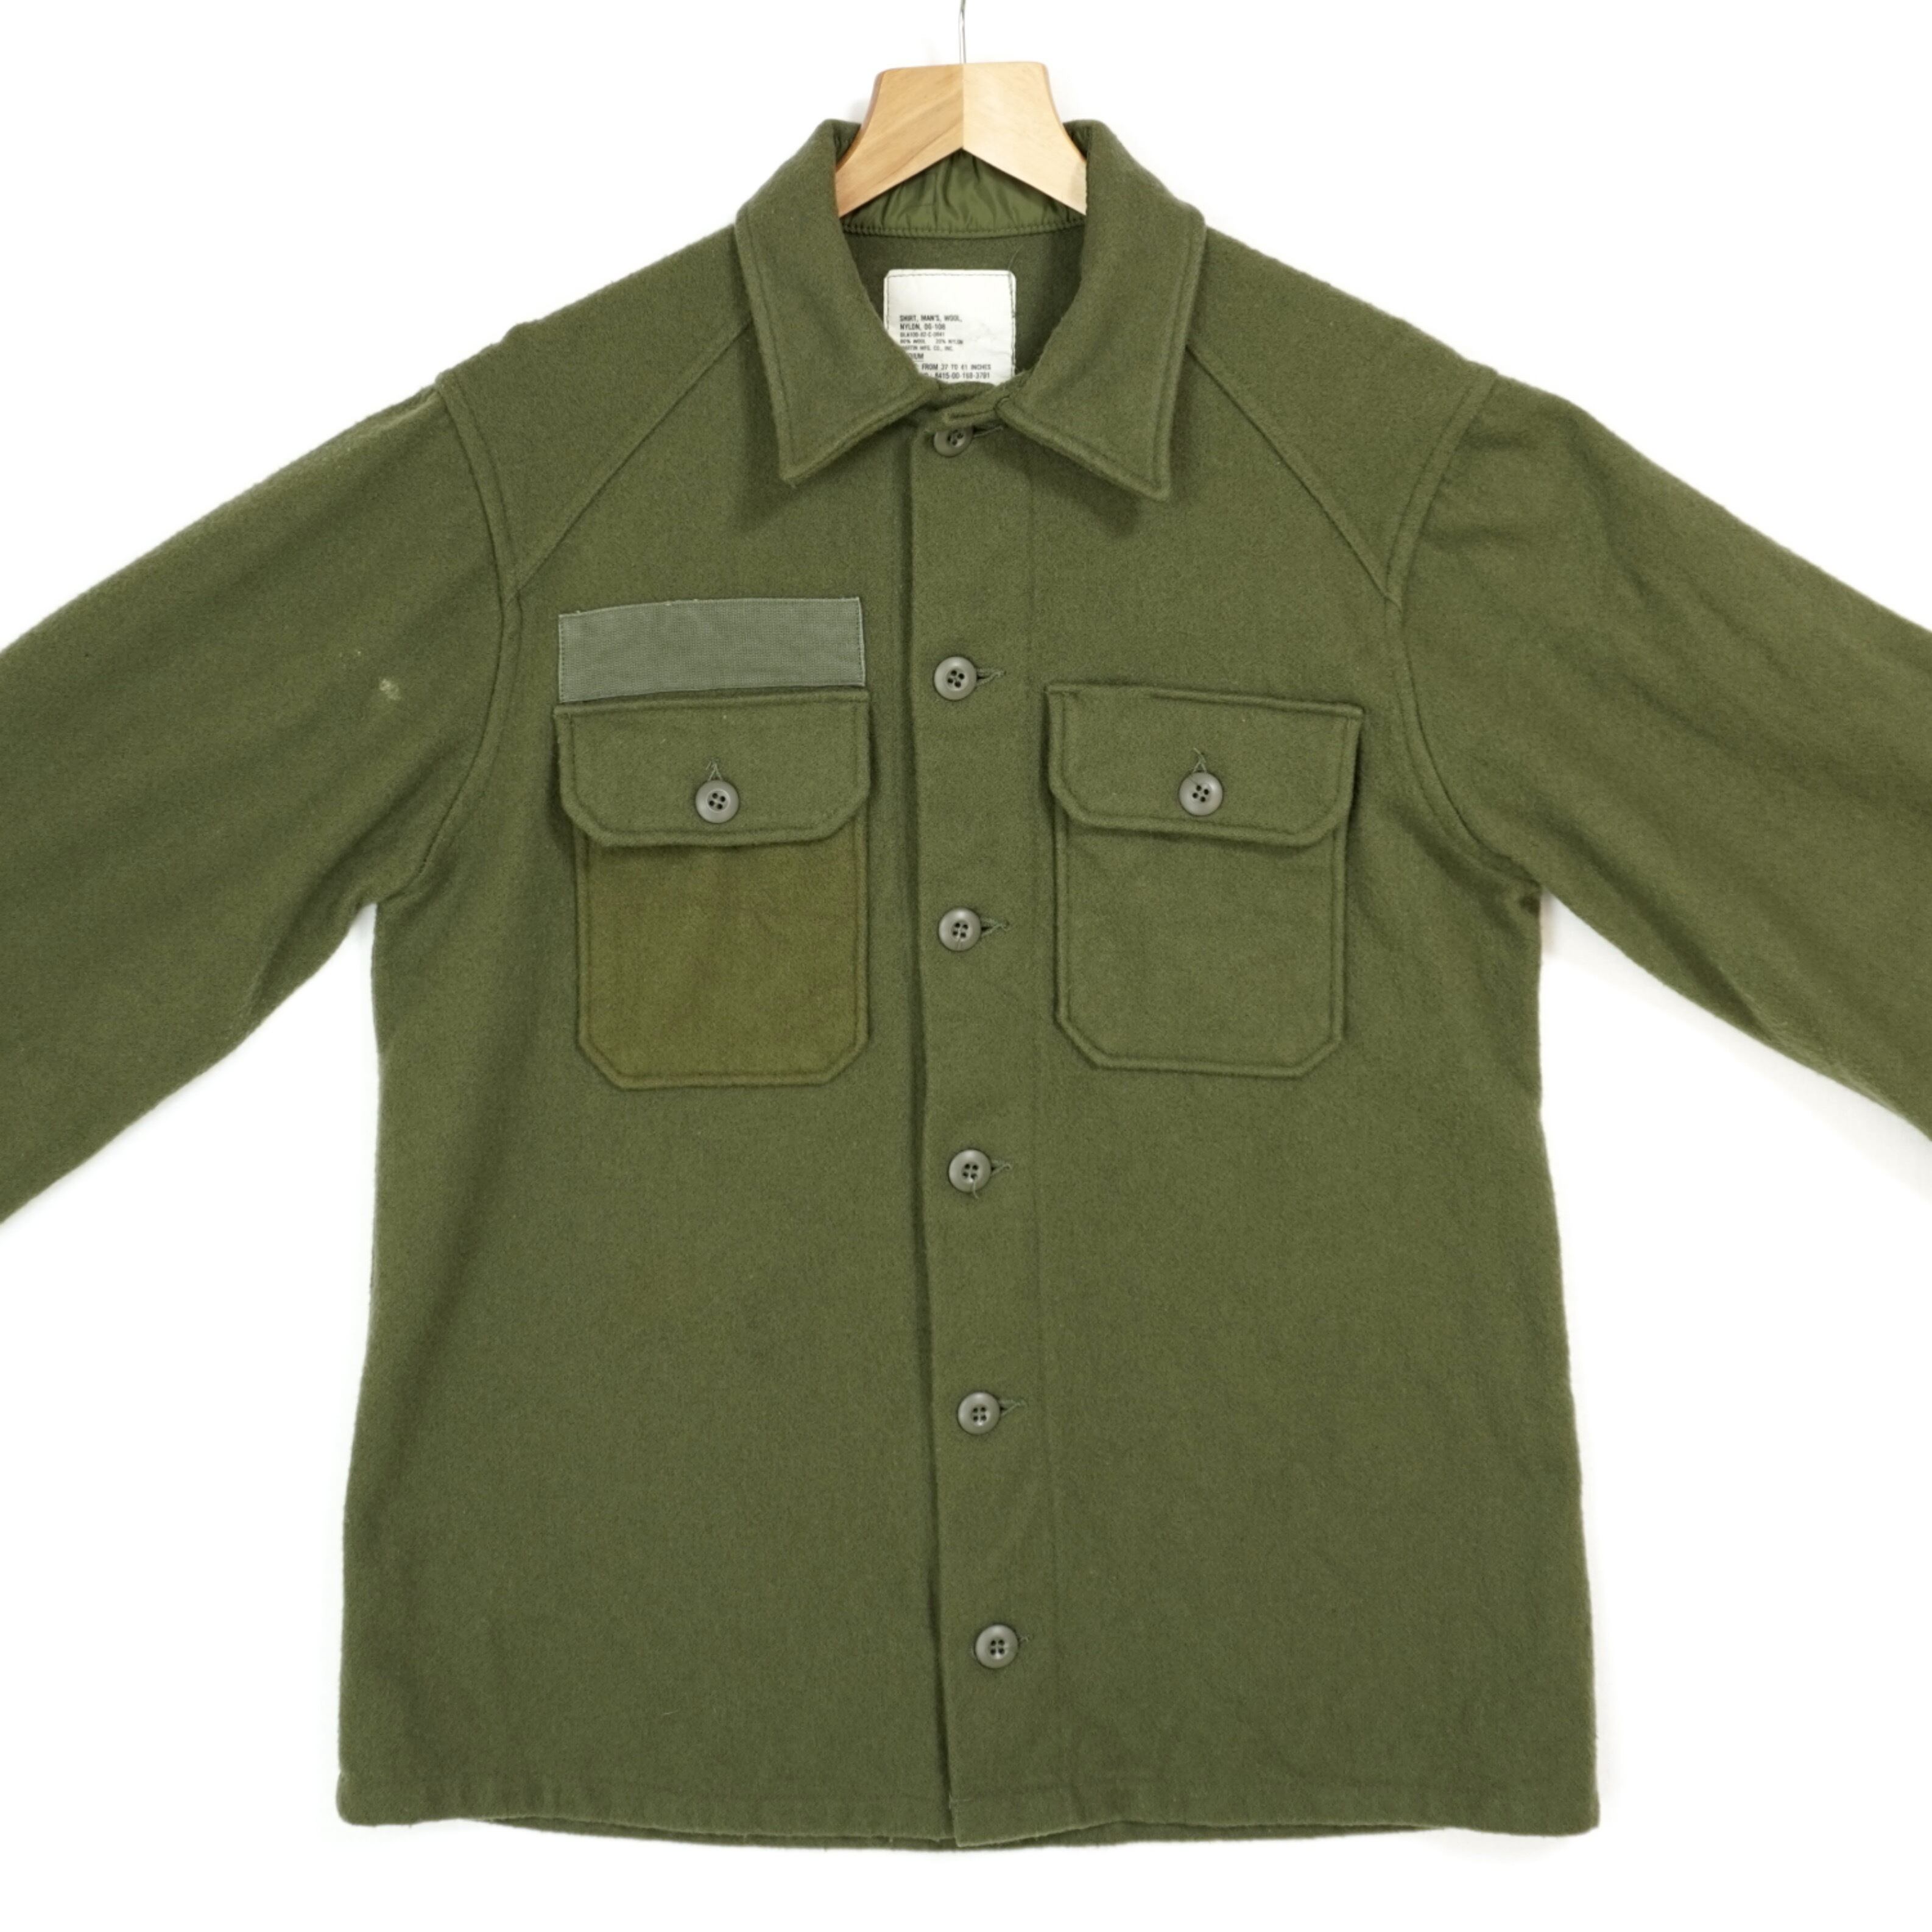 US ARMY OG-108 Wool Shirts 1982s MEDIUM SHIRT23195